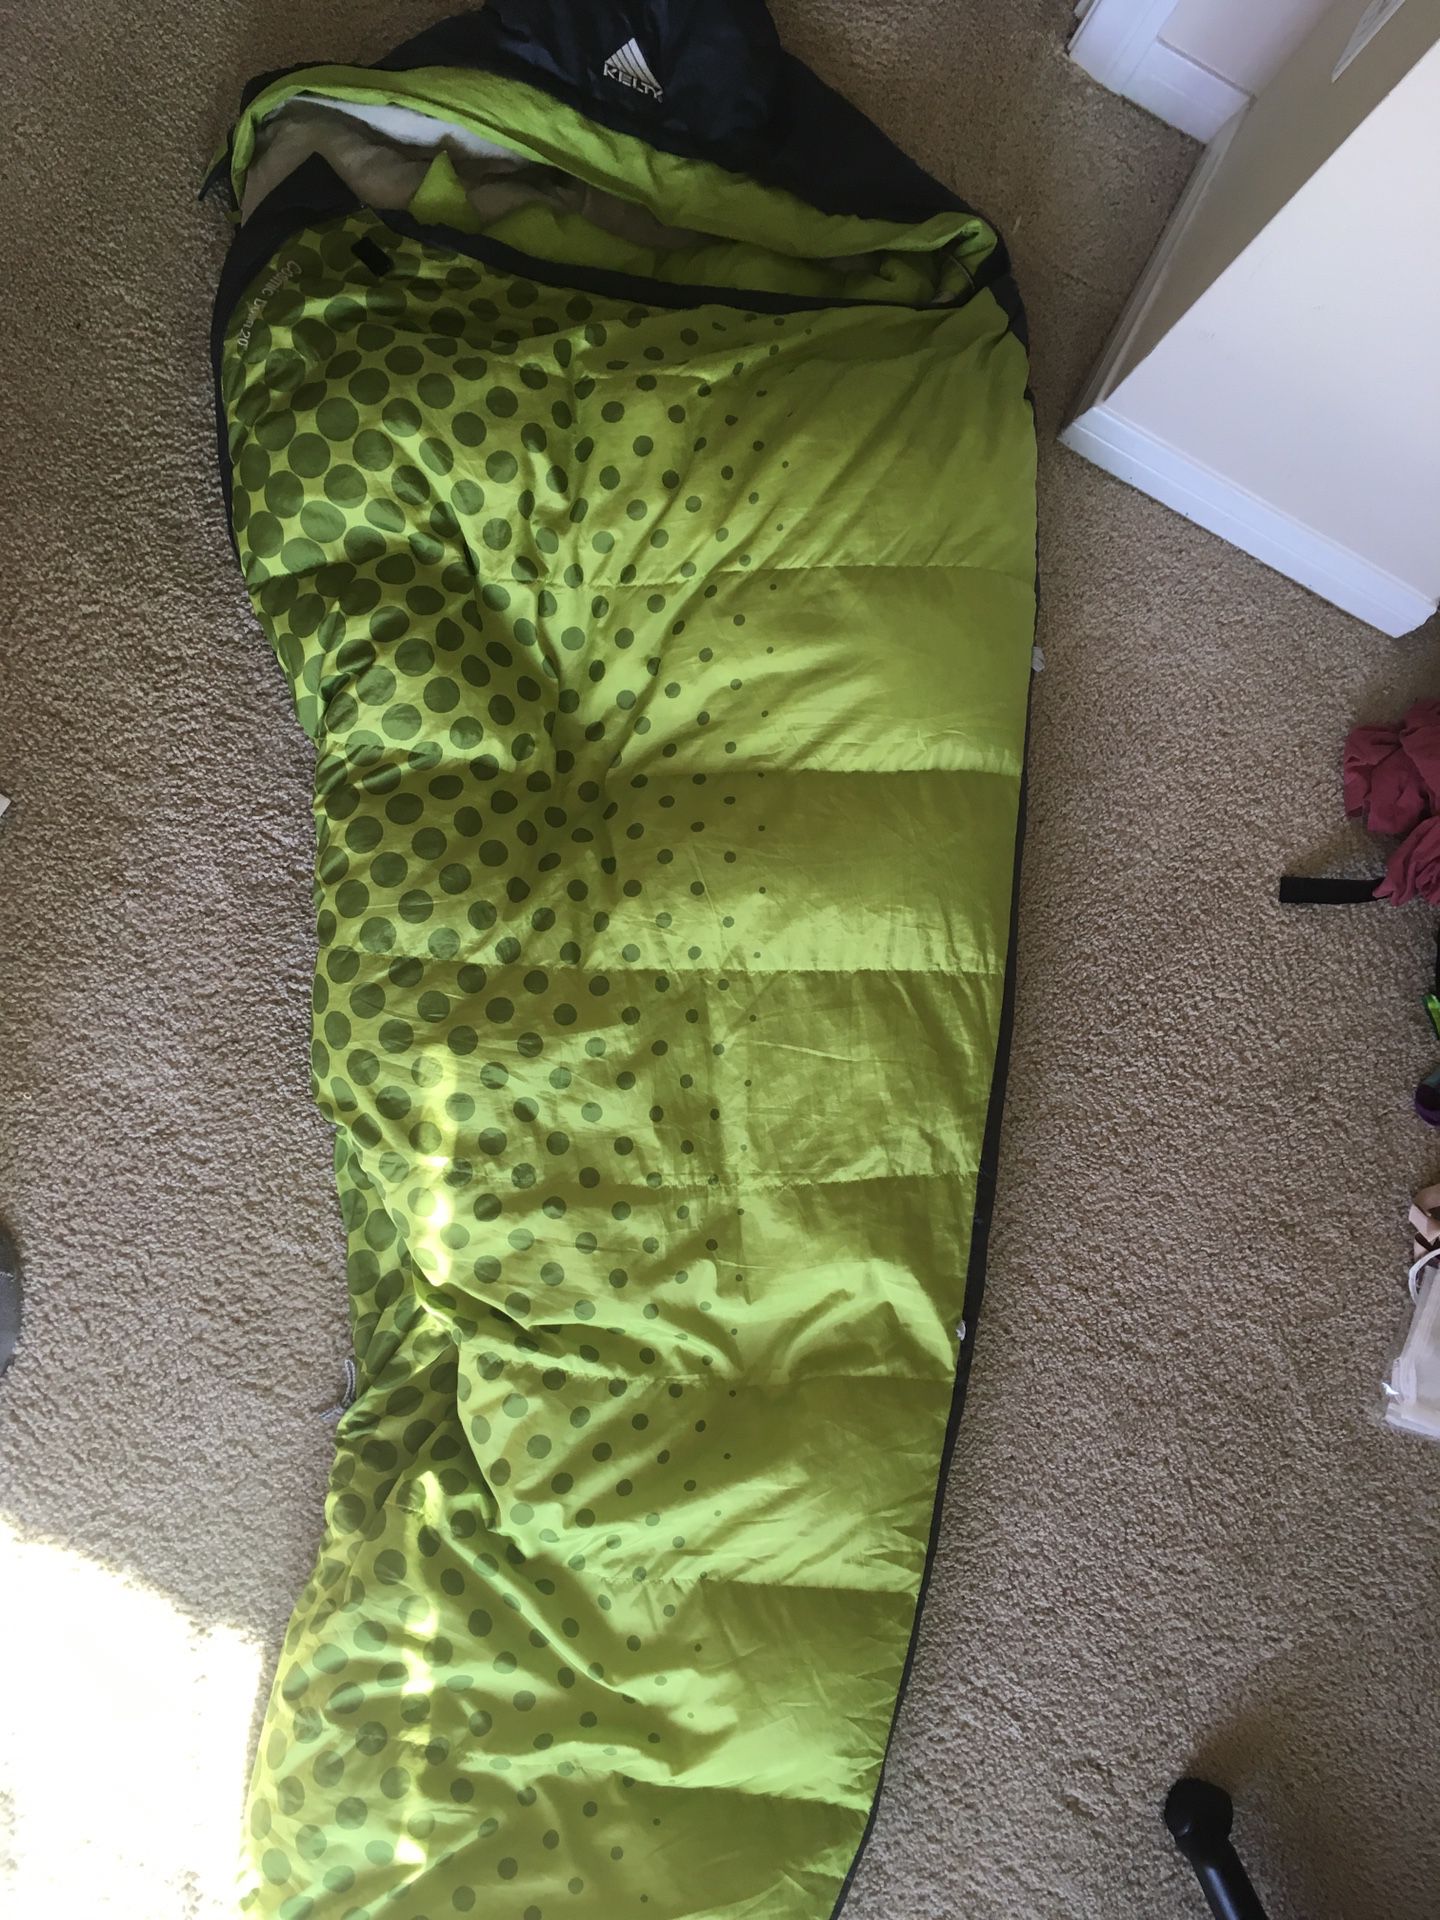 Kelty sleeping bag